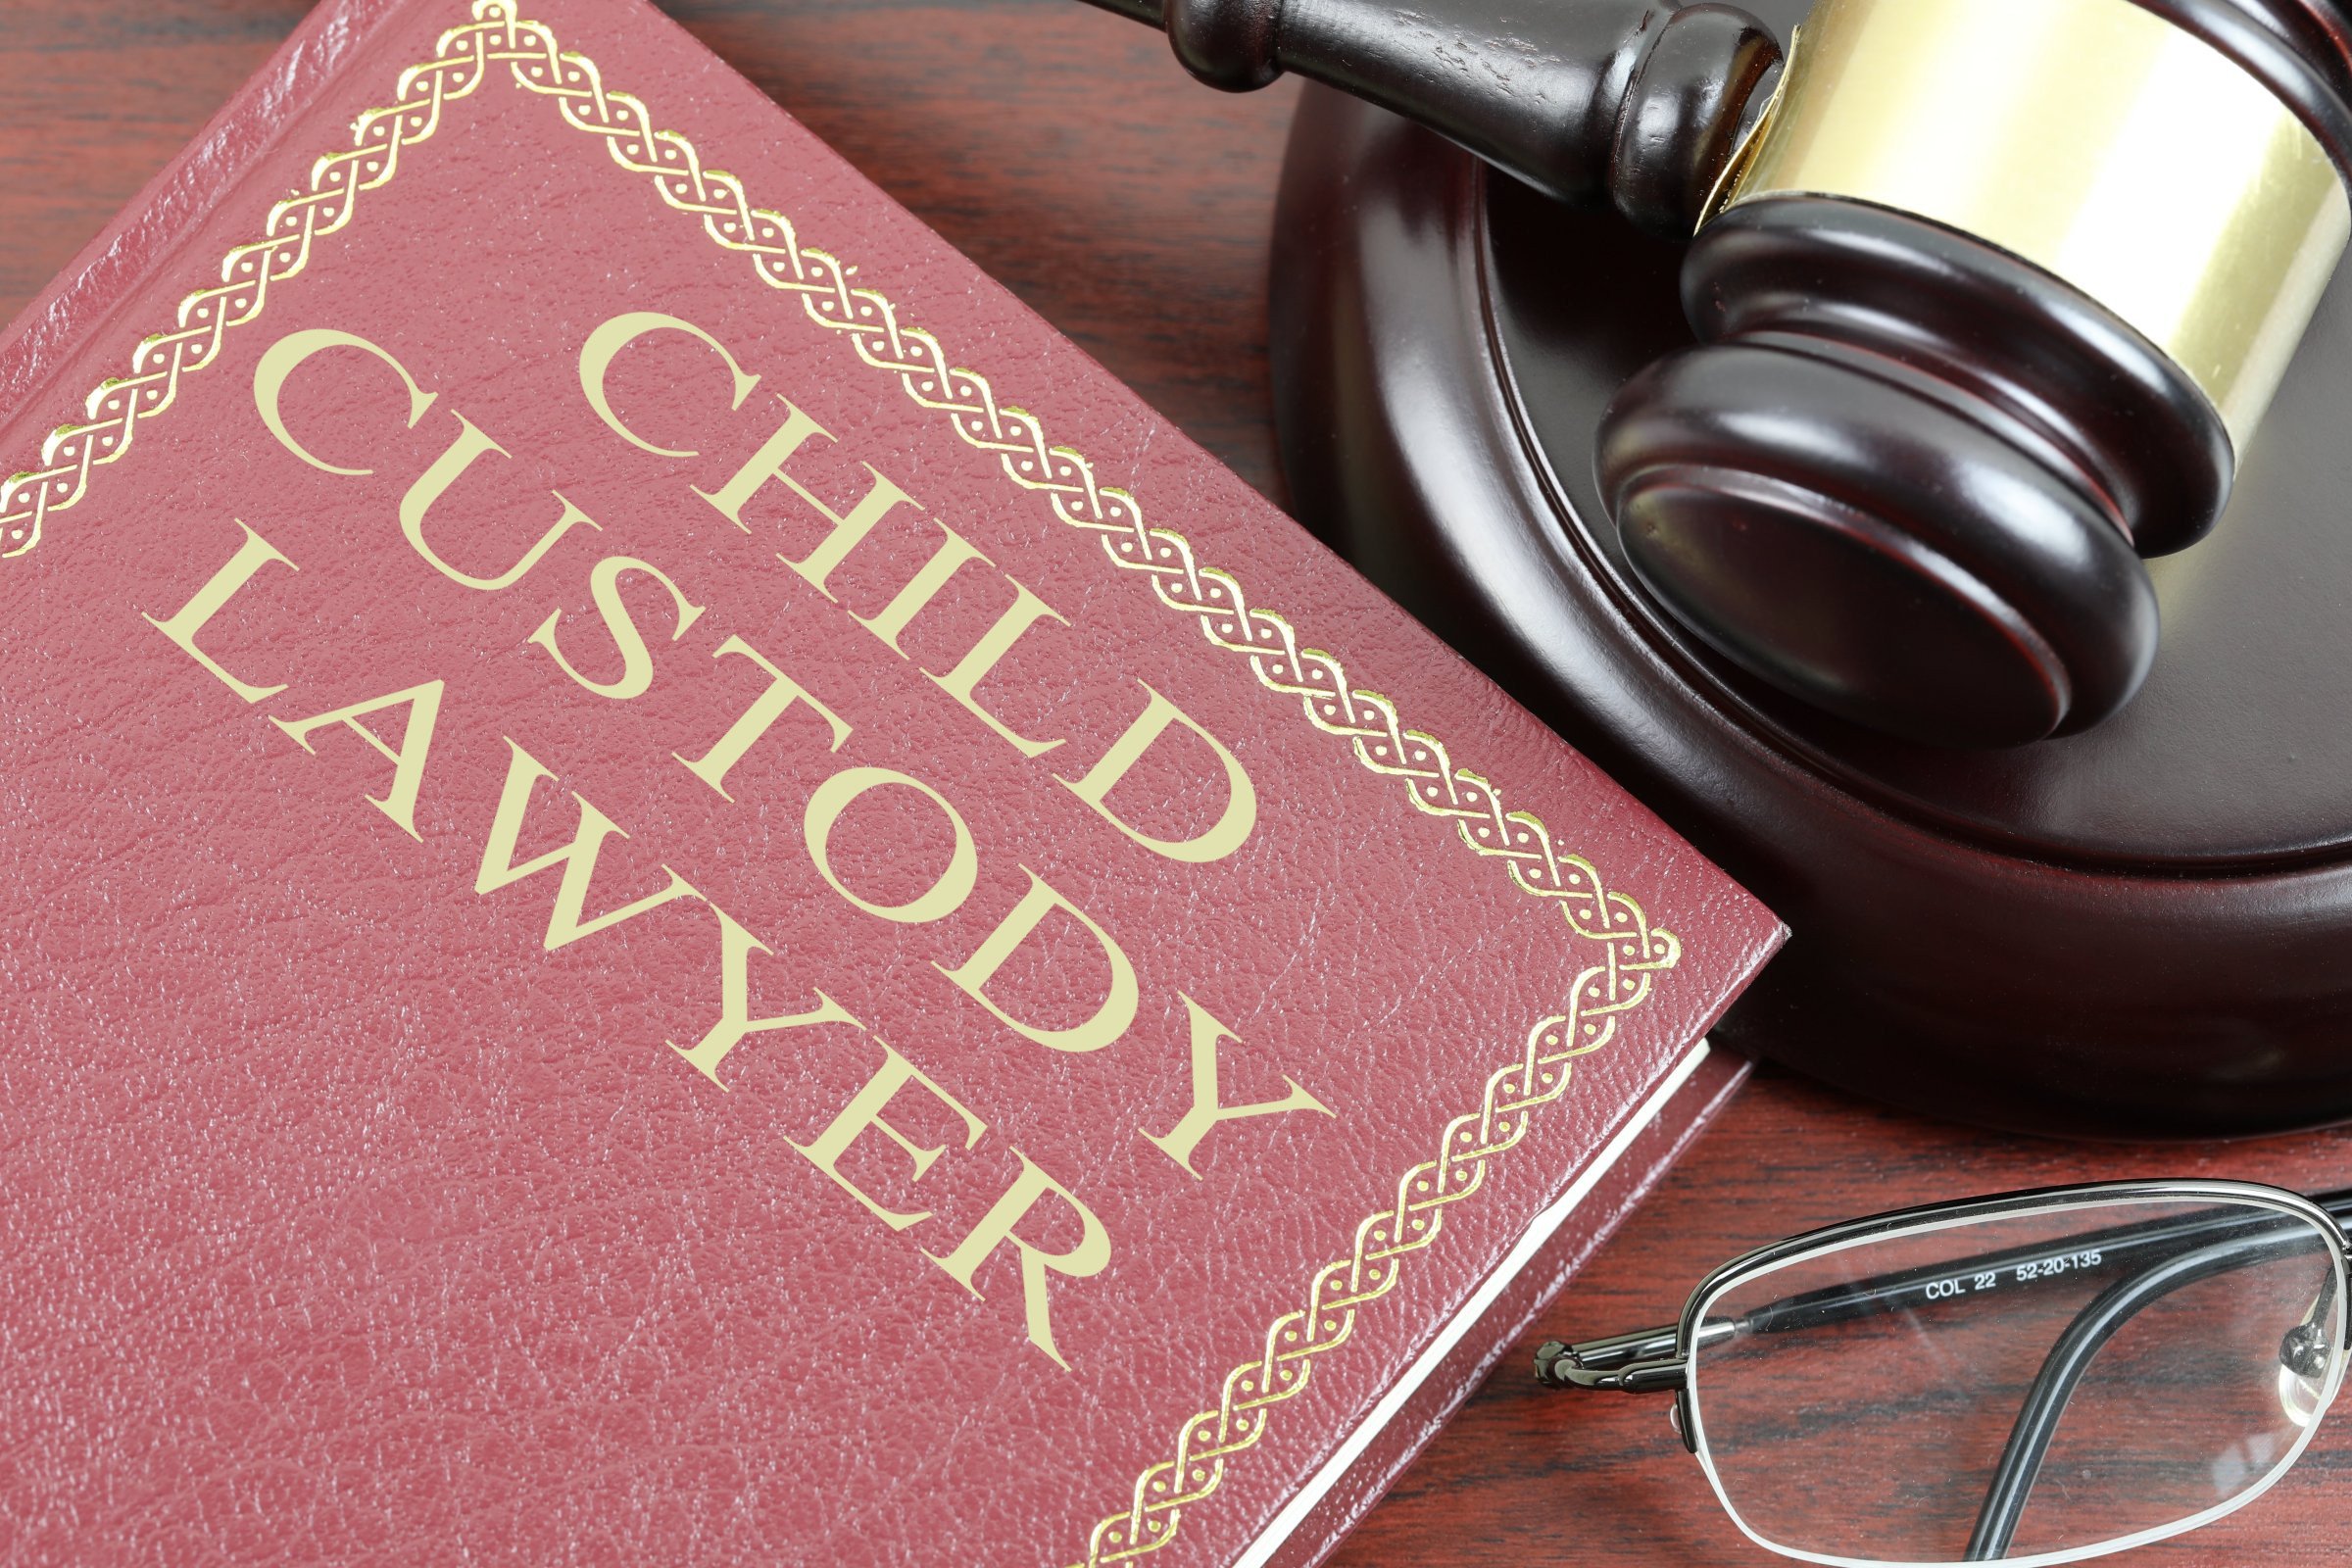 child custody lawyer